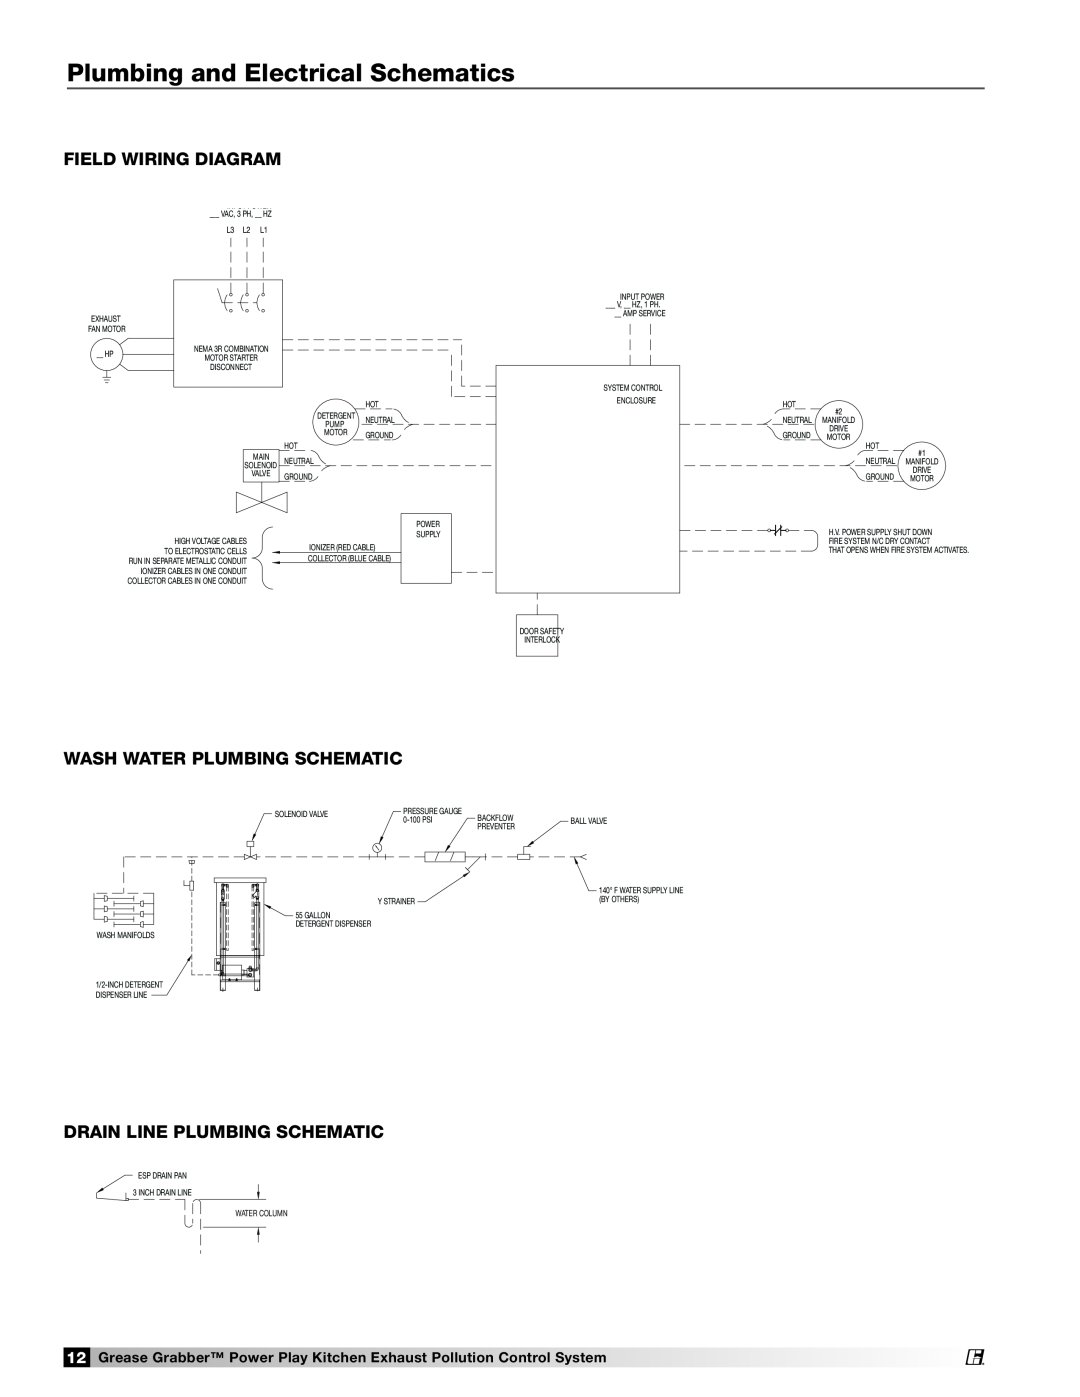 Greenheck Fan 474754 Plumbing and Electrical Schematics, Field Wiring Diagram, Wash Water Plumbing Schematic 